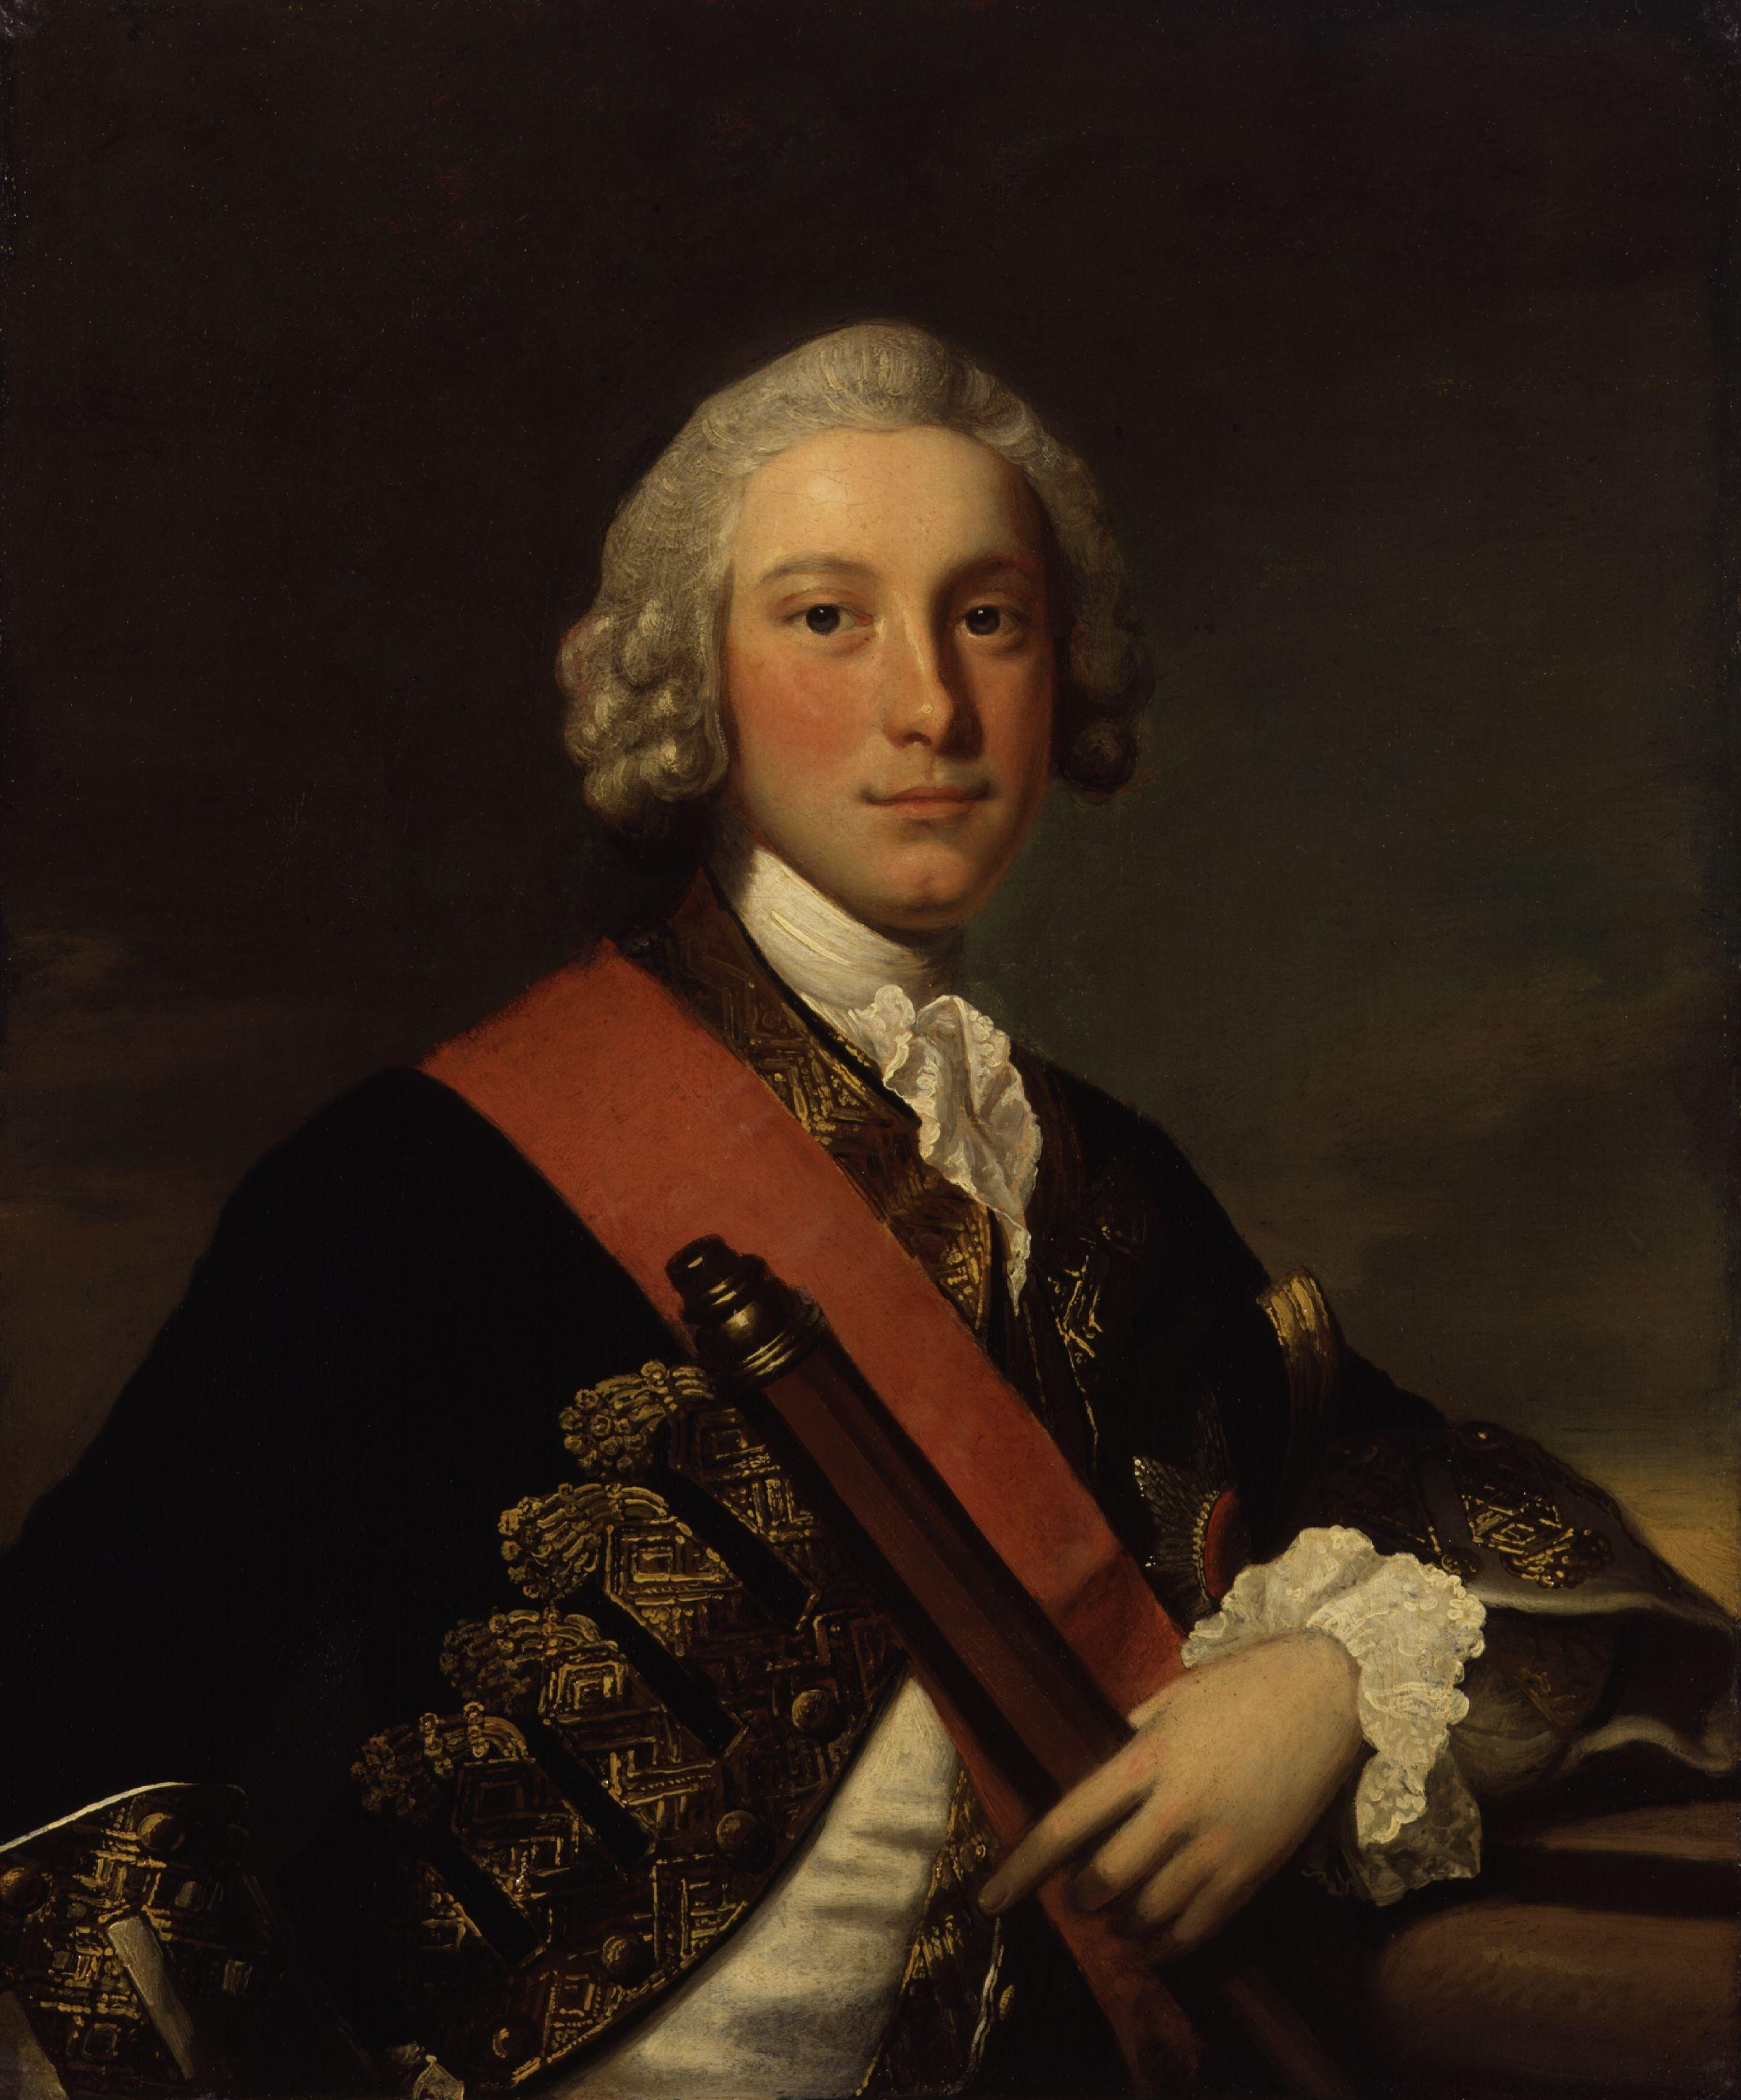 Sir George Pocock by Thomas Hudson